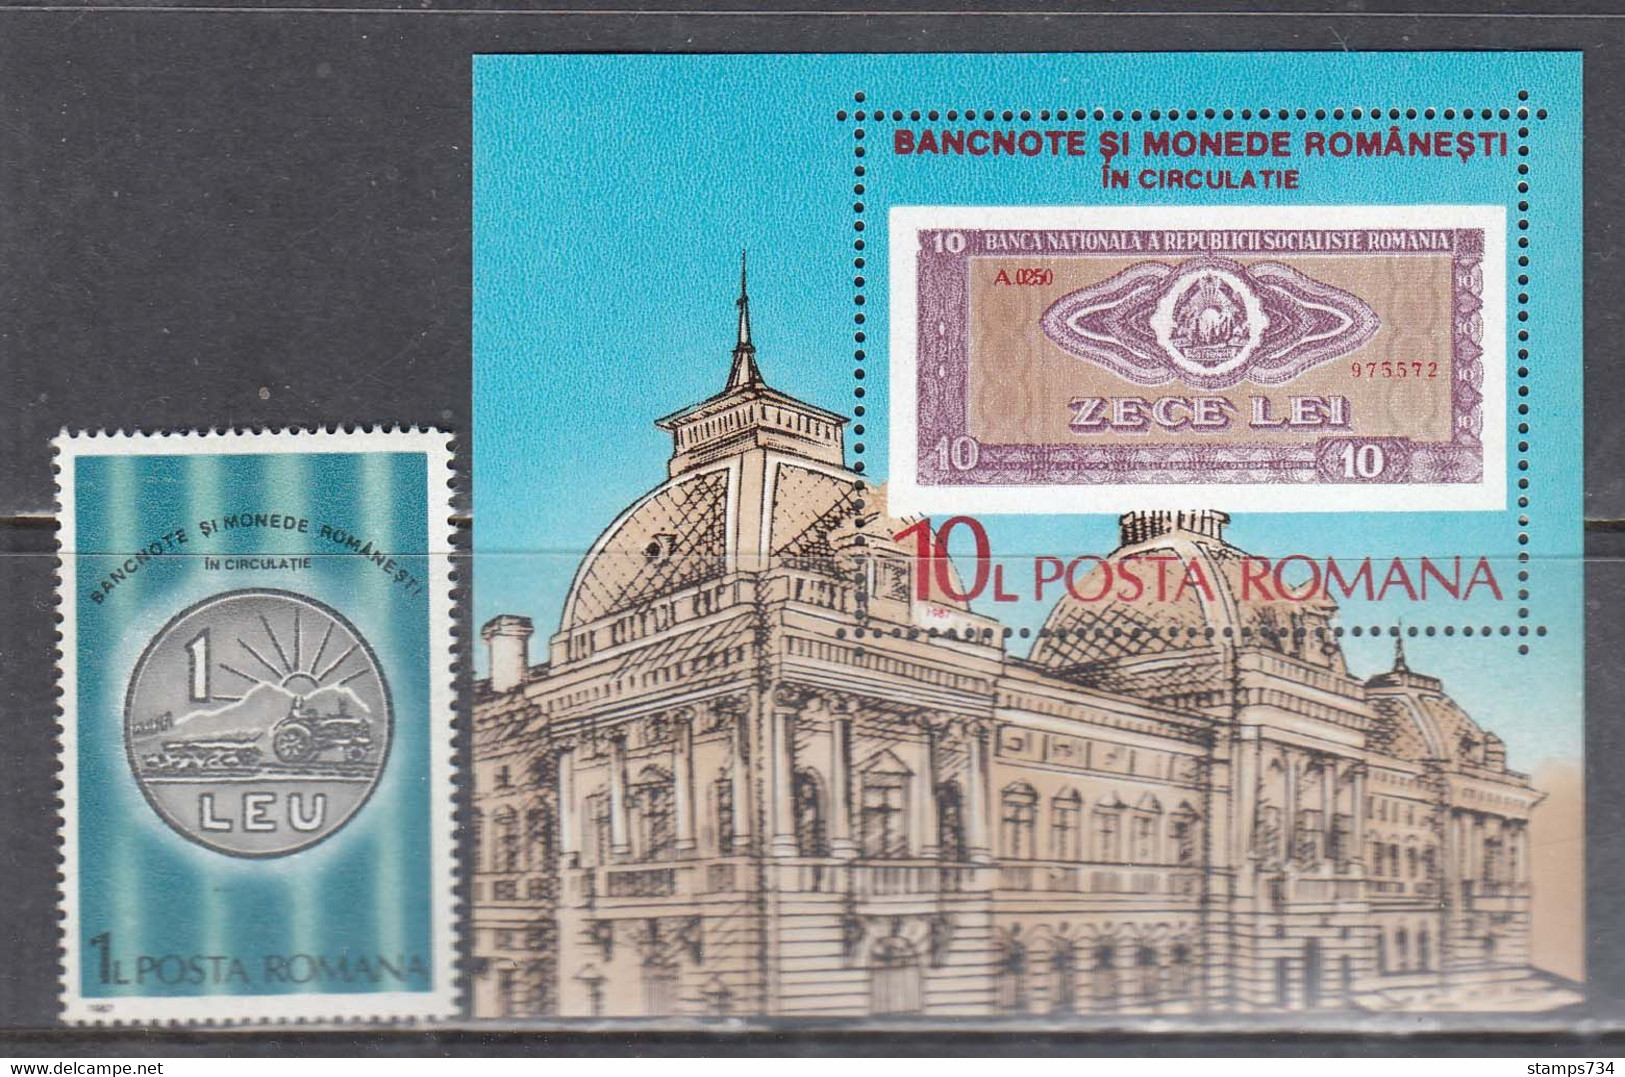 Romania 1987 - Circulating Romanian Banknotes And Coins, Mi-Nr. 4339+Bl. 233, MNH** - Neufs